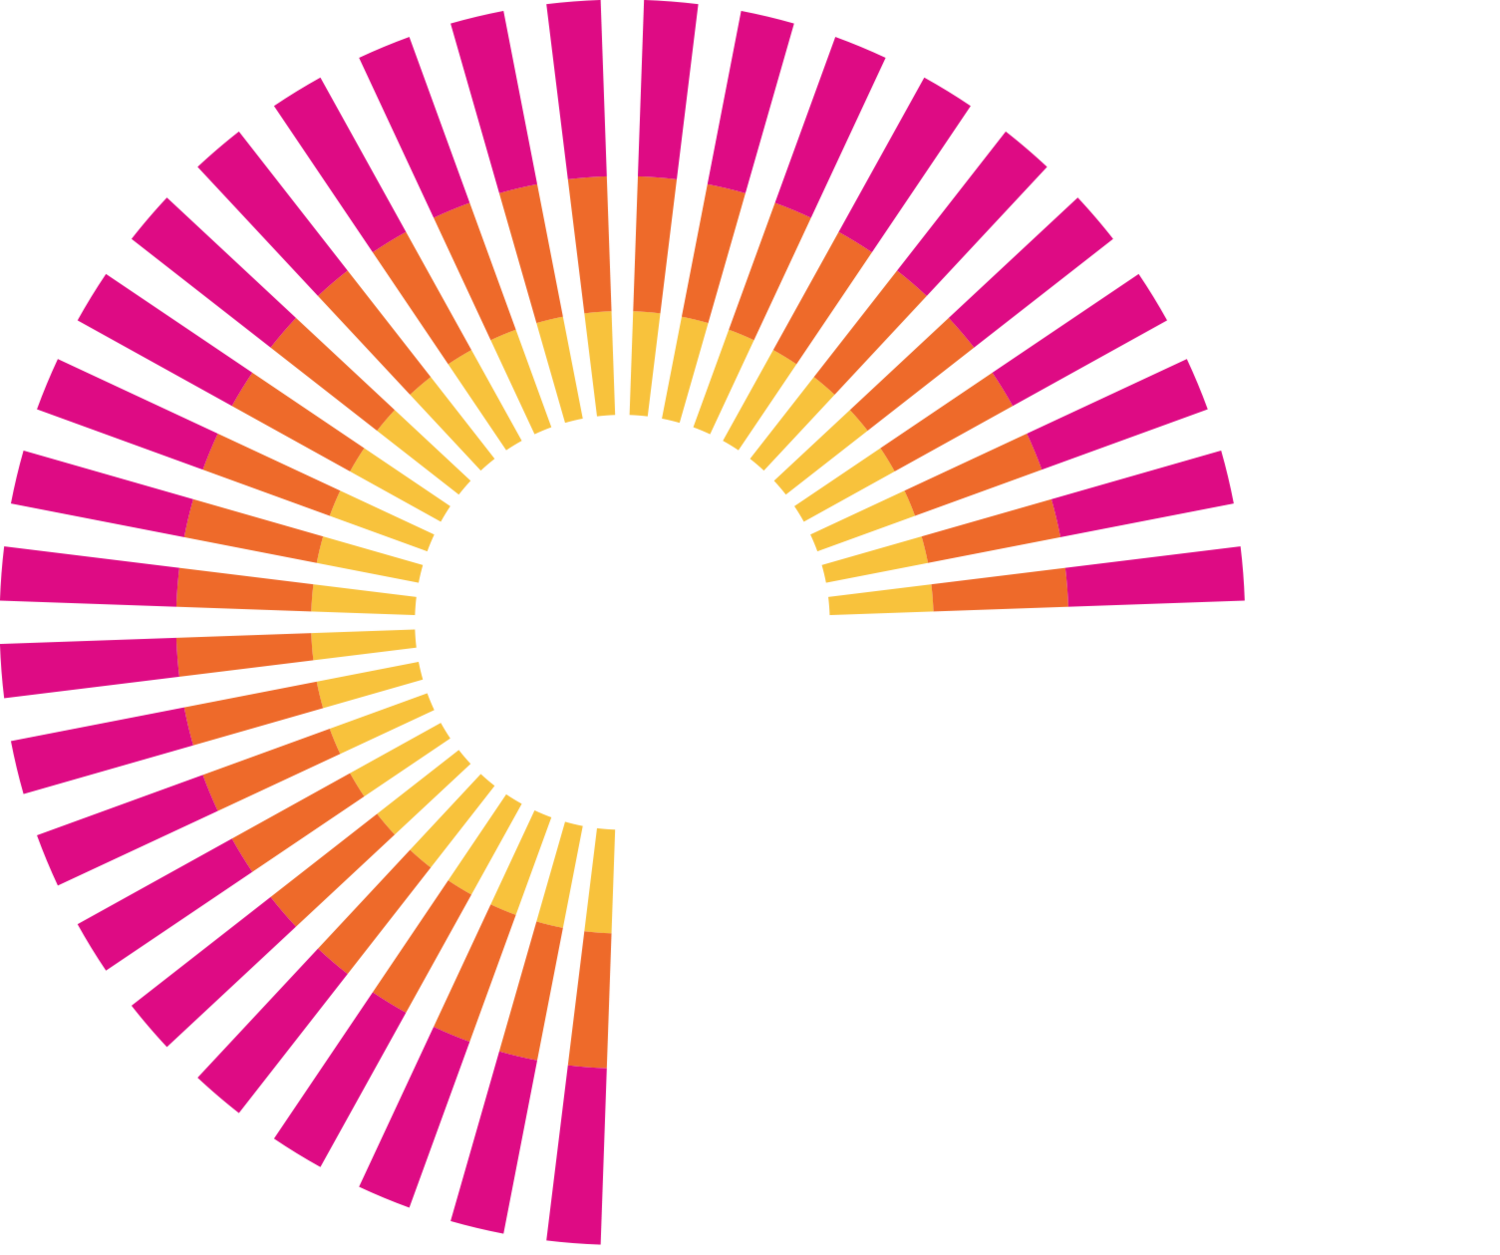  Princeton Summer Theater